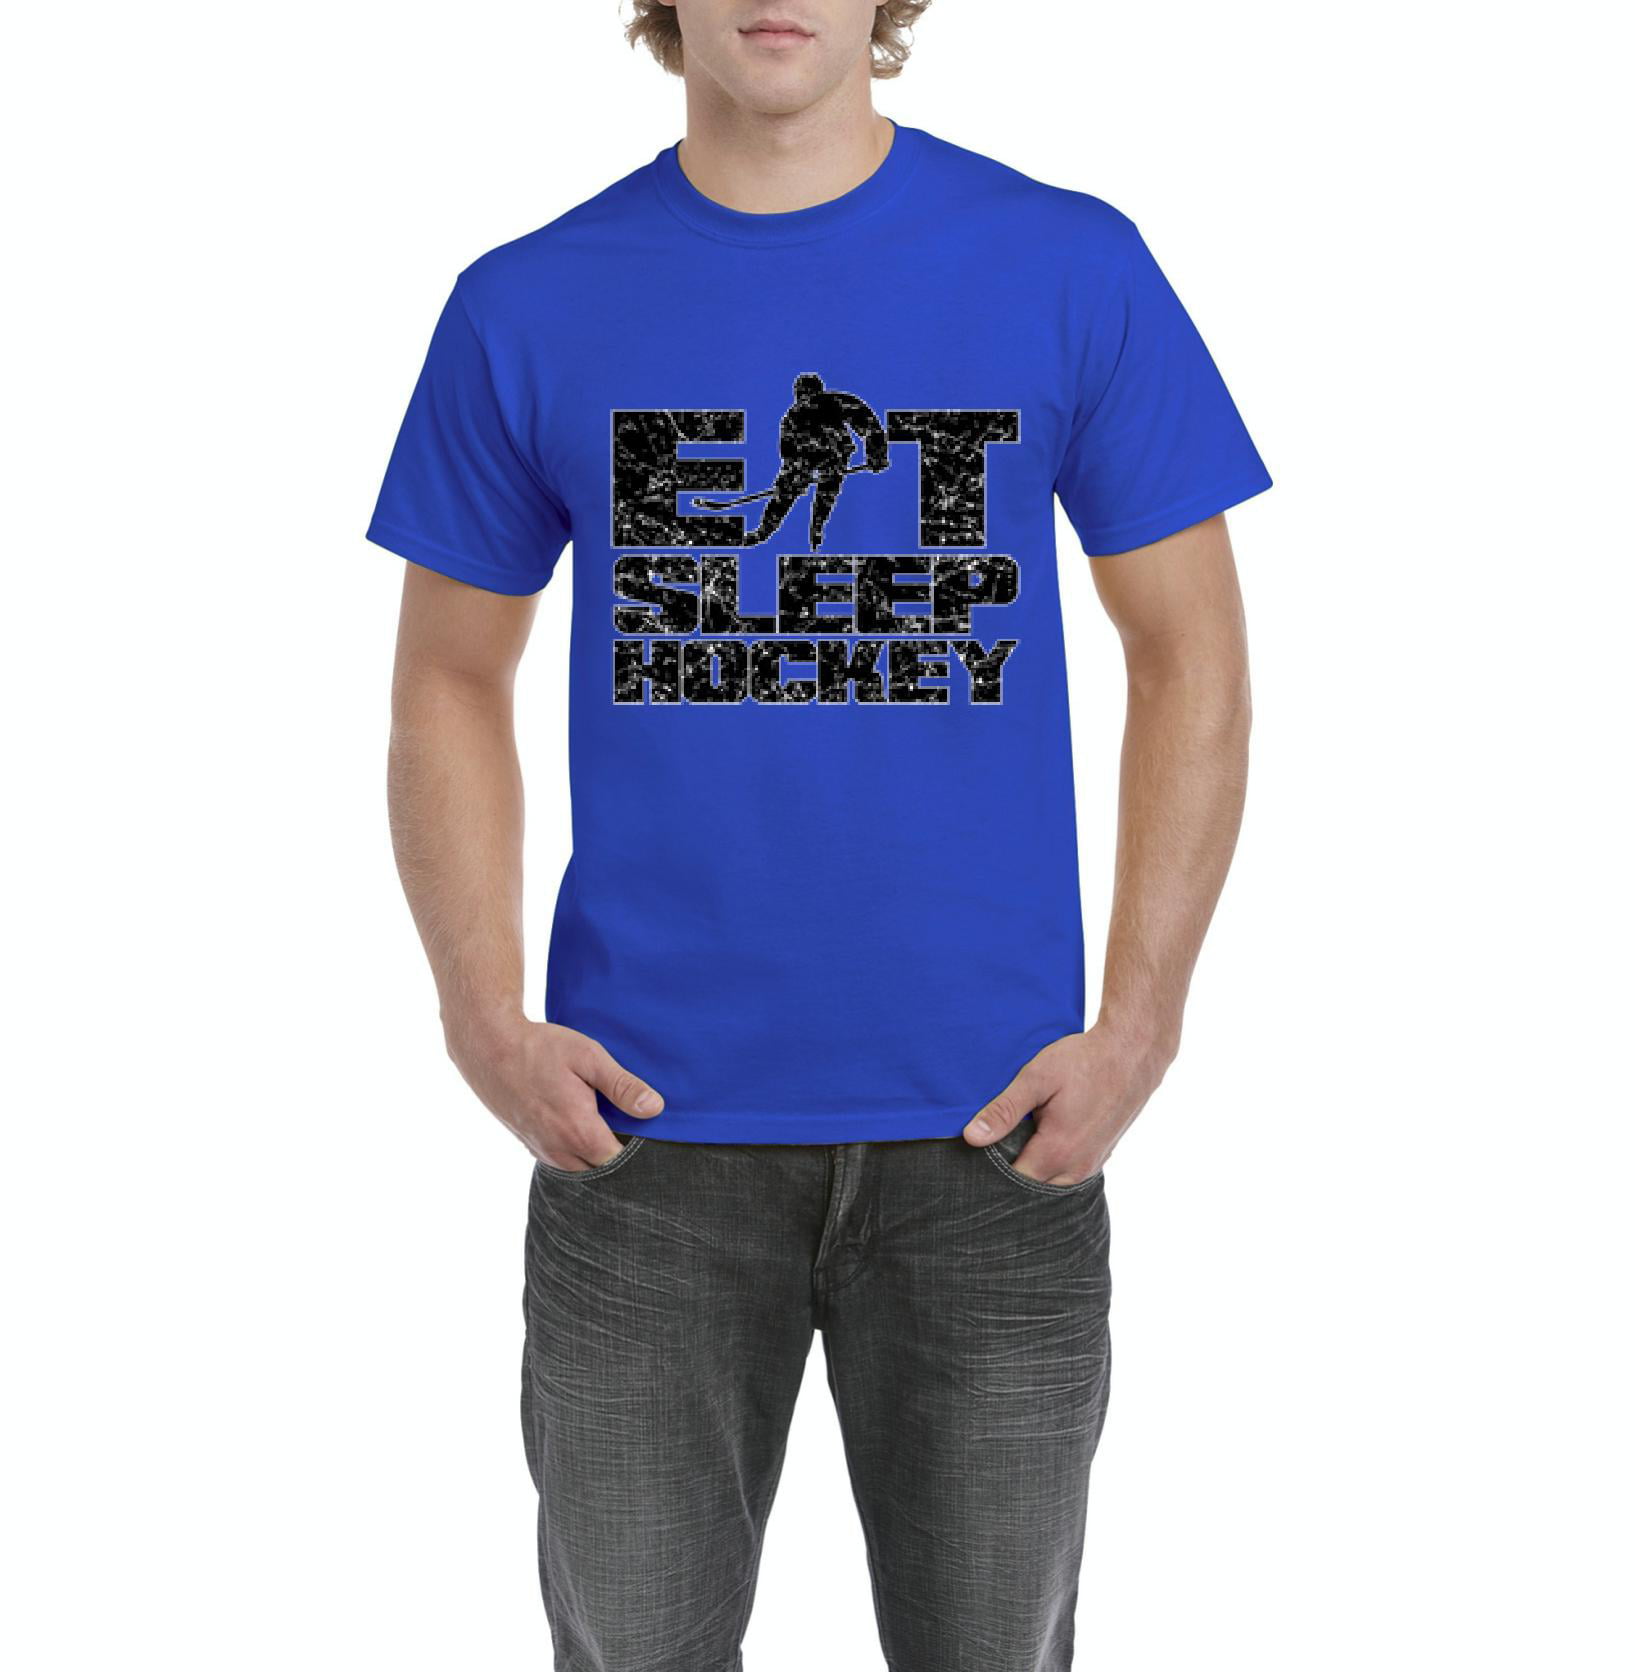 Hockey Eat Sleep Play T-Shirt Jersey Short Sleeve Tee New Adult and Youth Sizes 